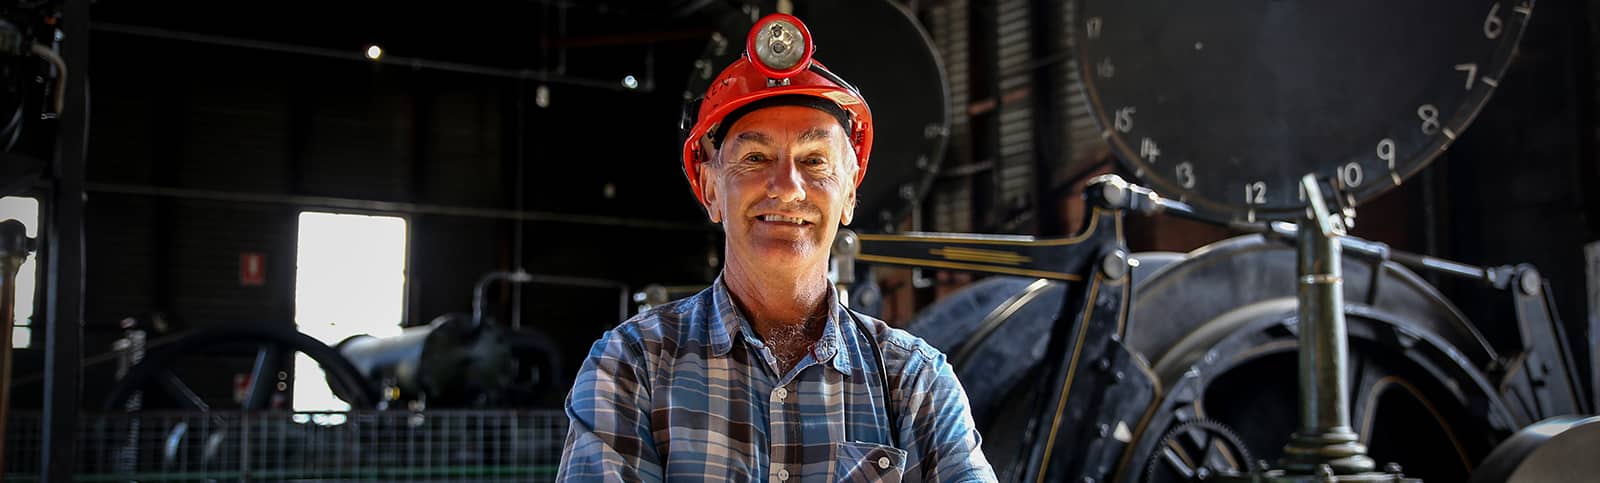 Central Deborah Gold Mine Tour Guide Ken standing in Engine Room with hard hat on